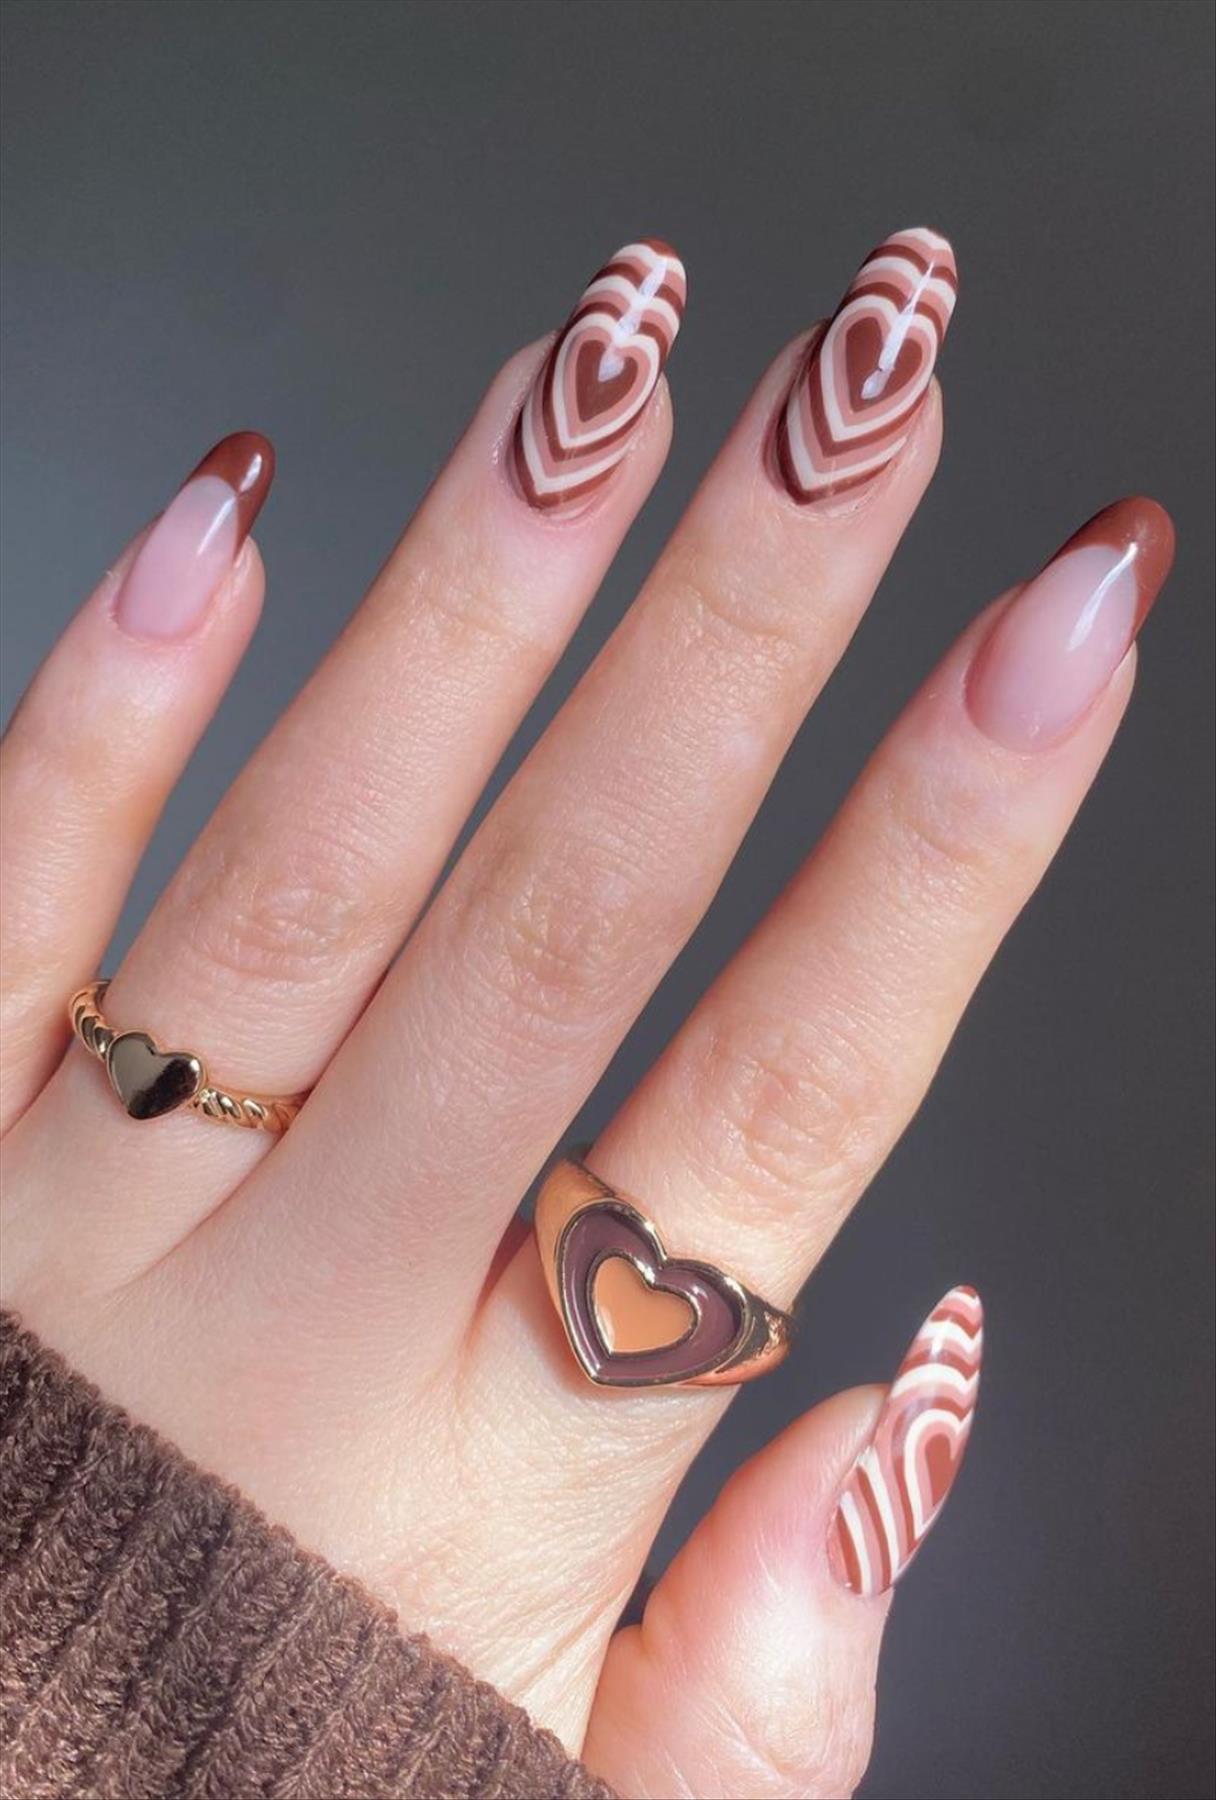 Beautiful Christmas nails inspiration for Winter mani!